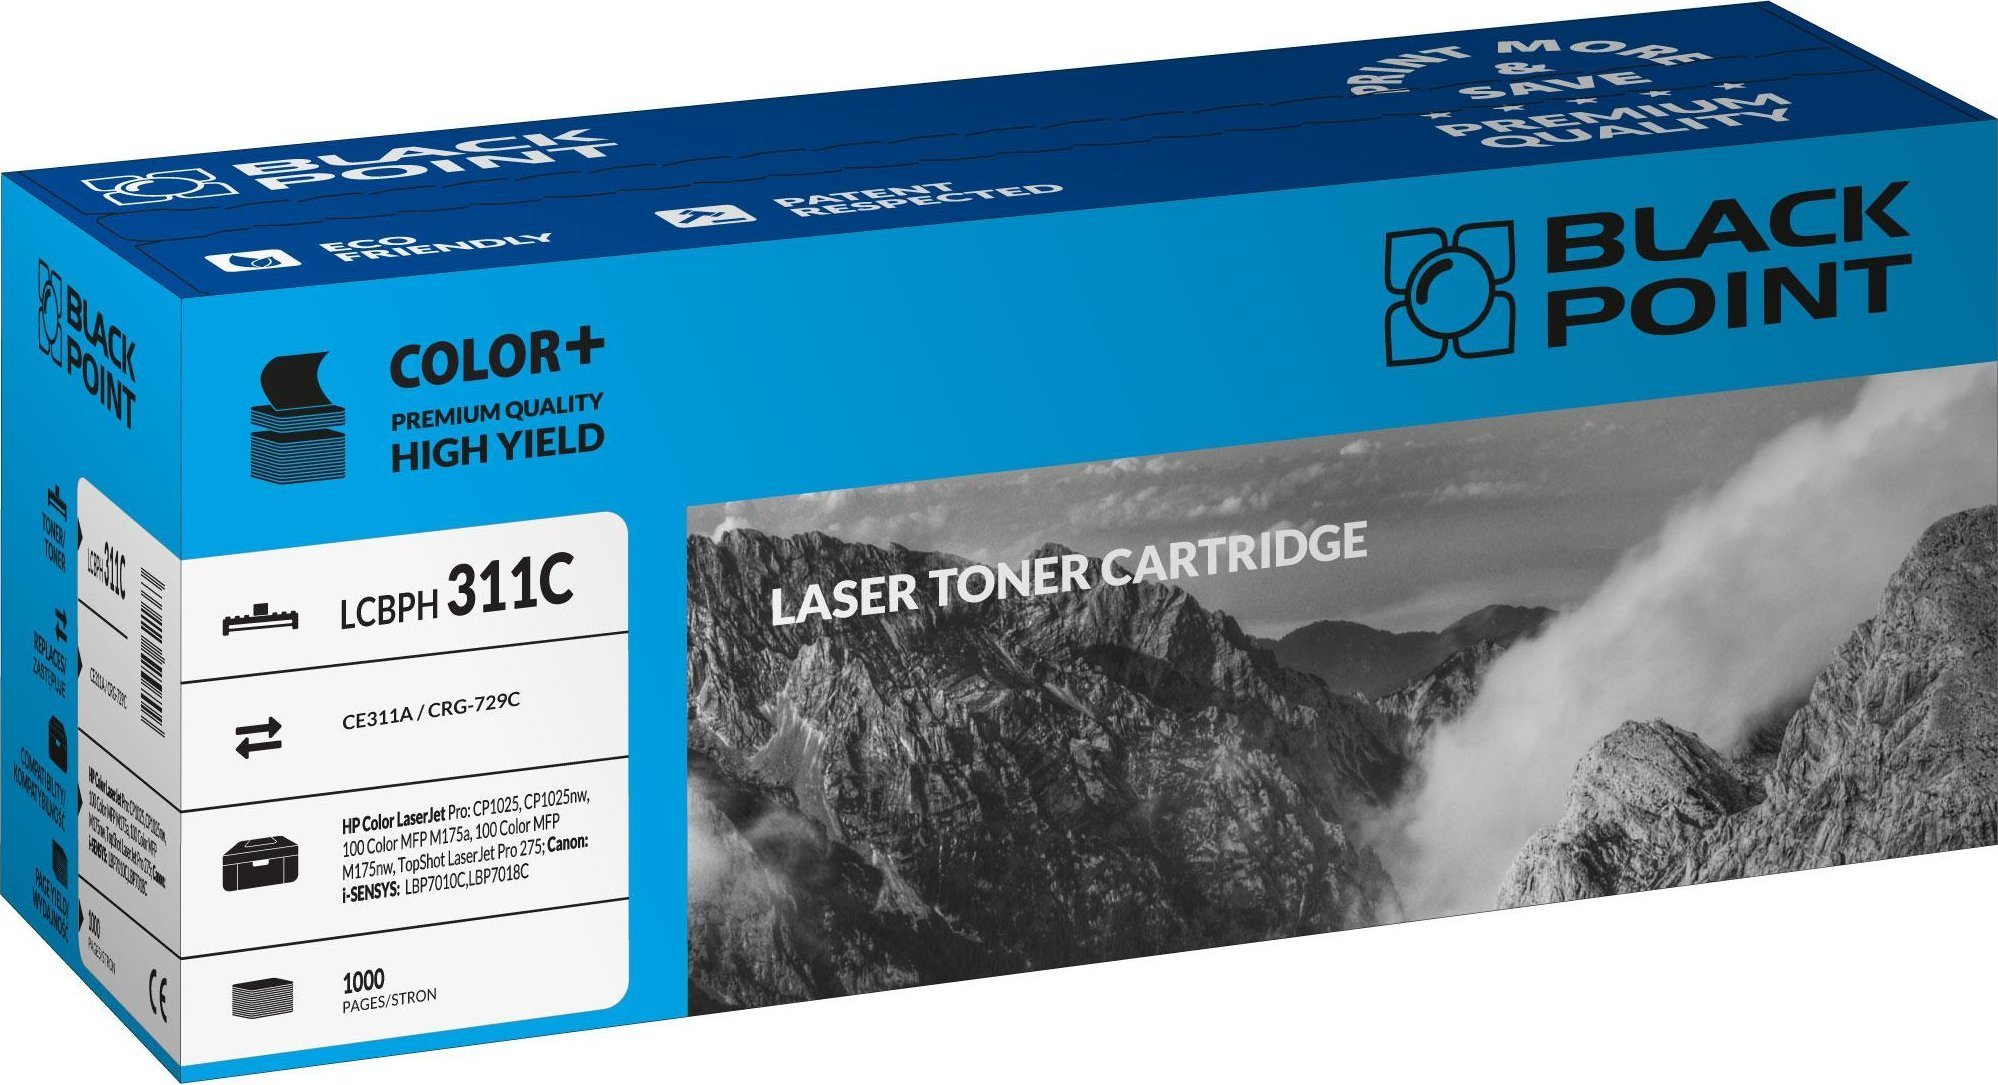 Toner Cyan, Black Point, Toner, Pentru HP Color LaserJet Pro CP1025 HP Color LaserJet Pro CP1025nw HP Color LaserJet Pro 100 M175a HP Color LaserJet Pro 100 M175nw, 1000 pagini